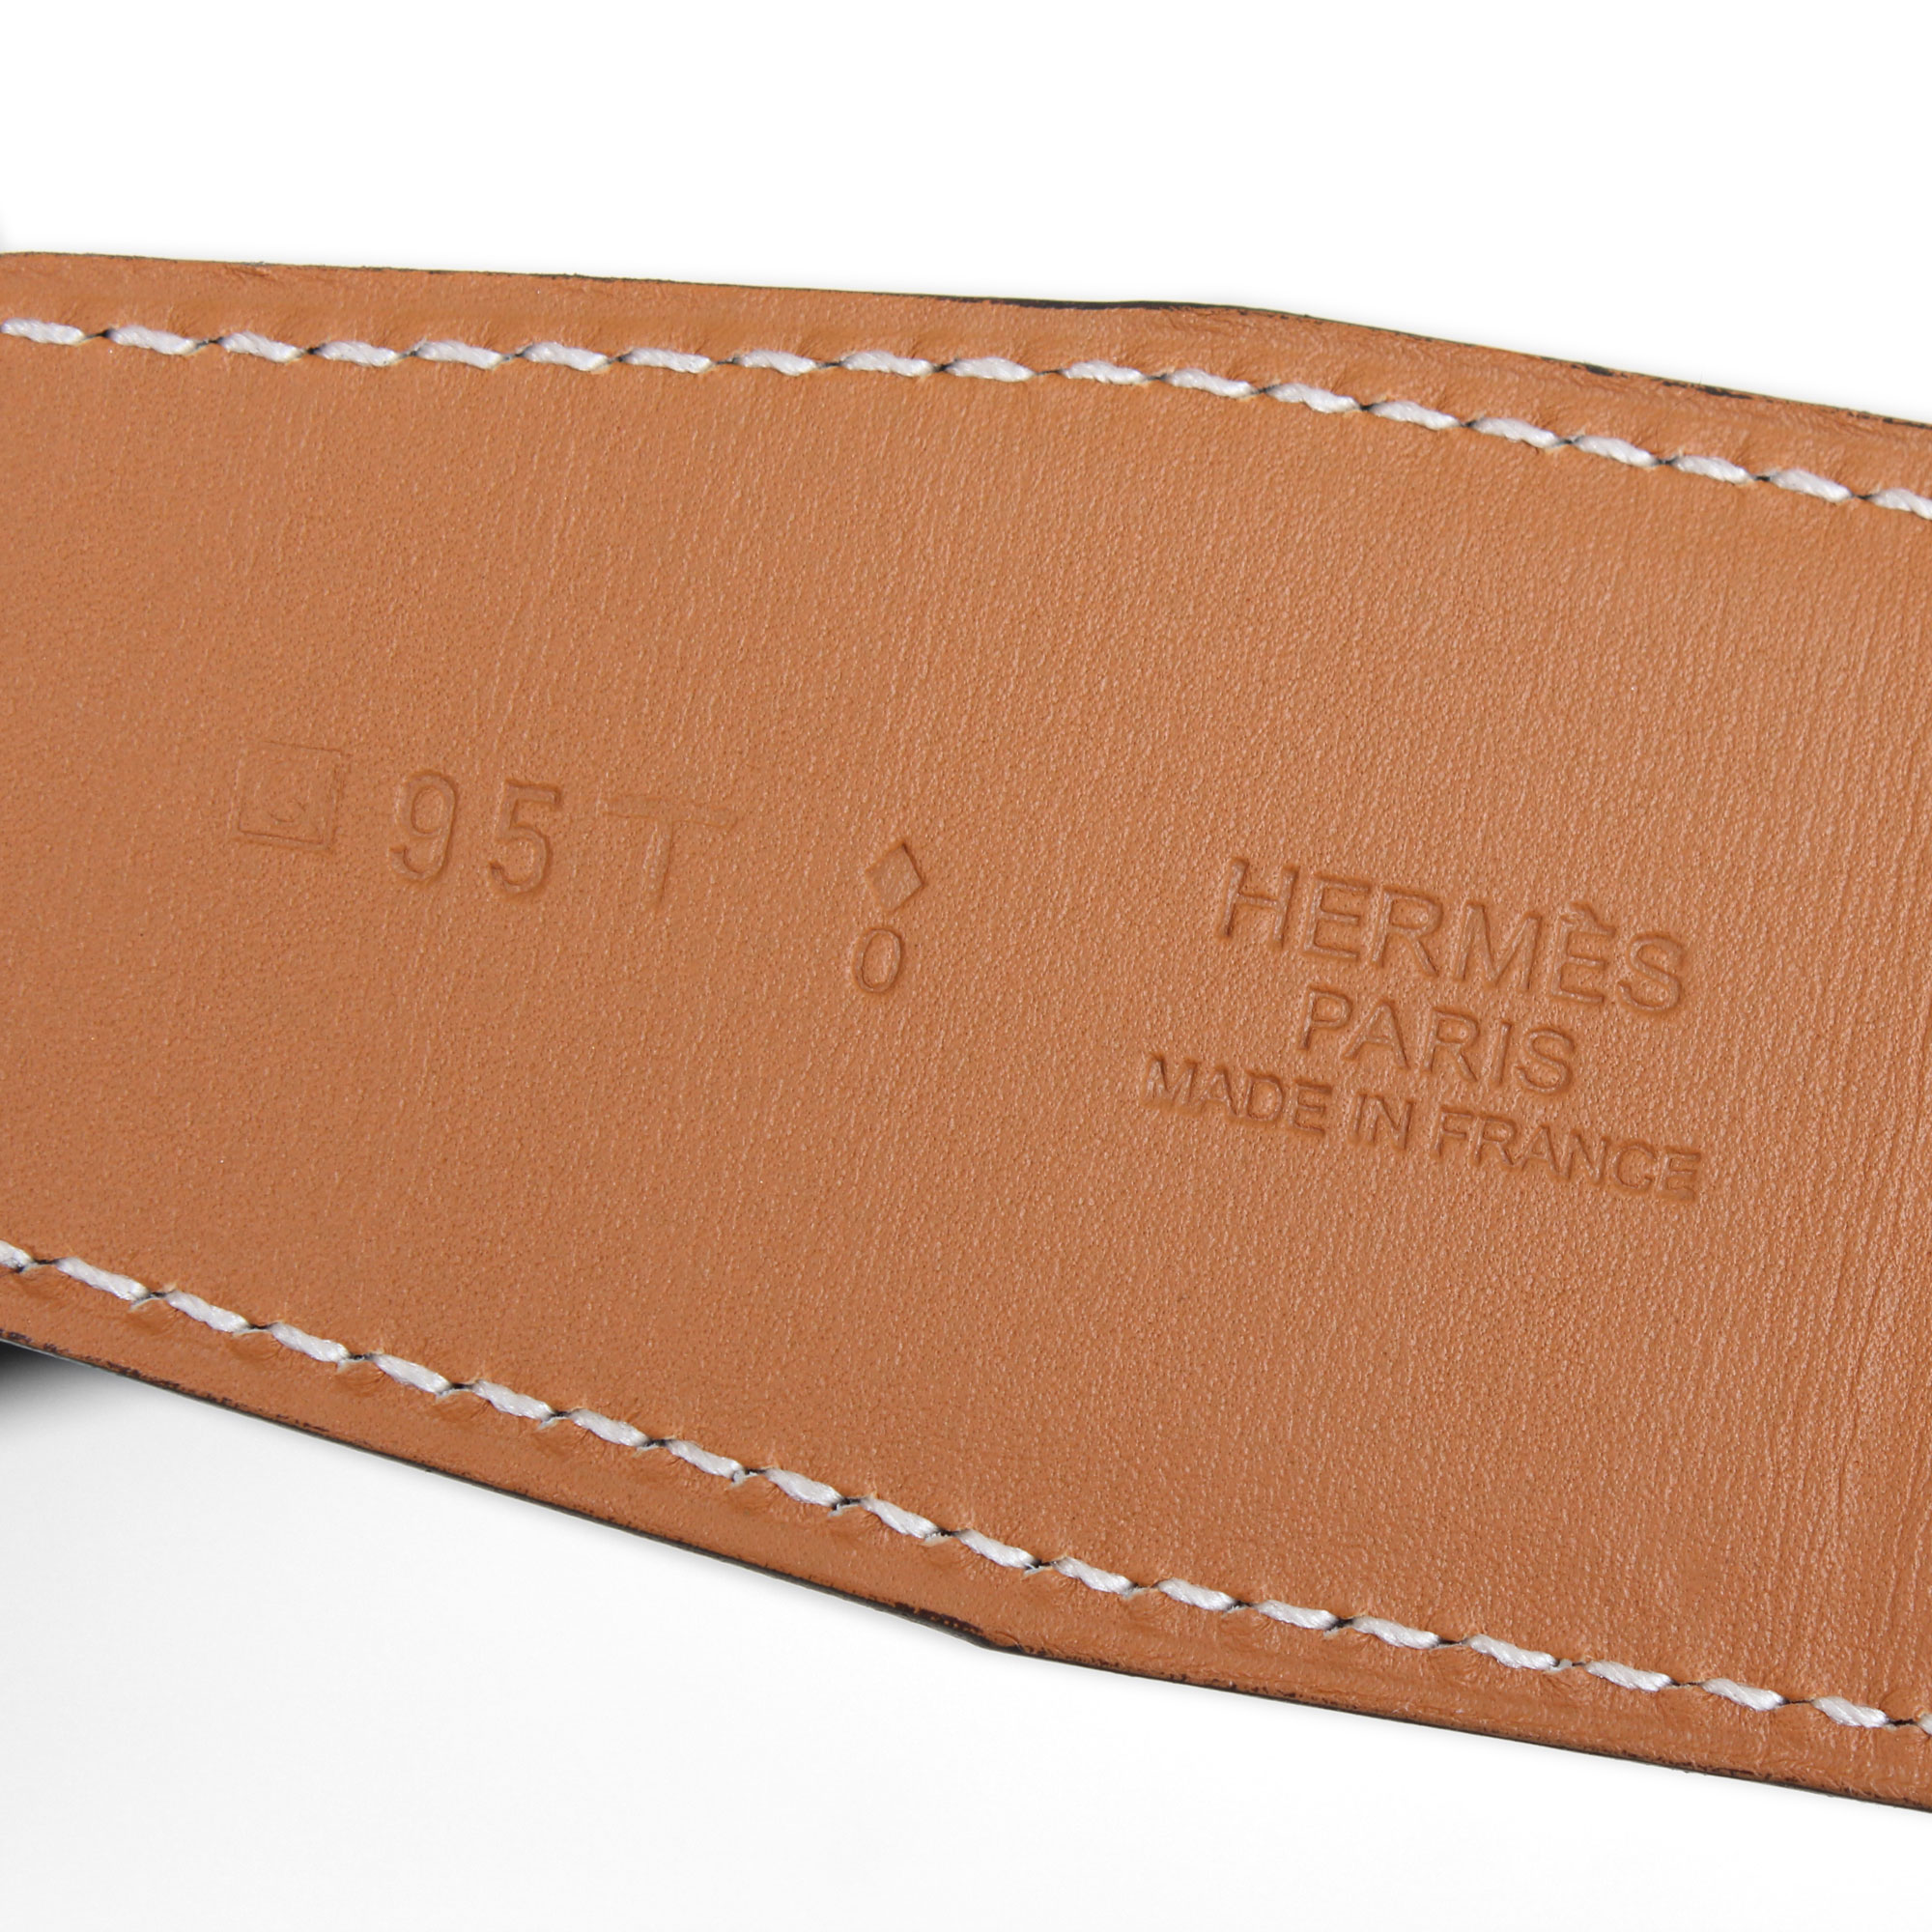 hermes belt serial number